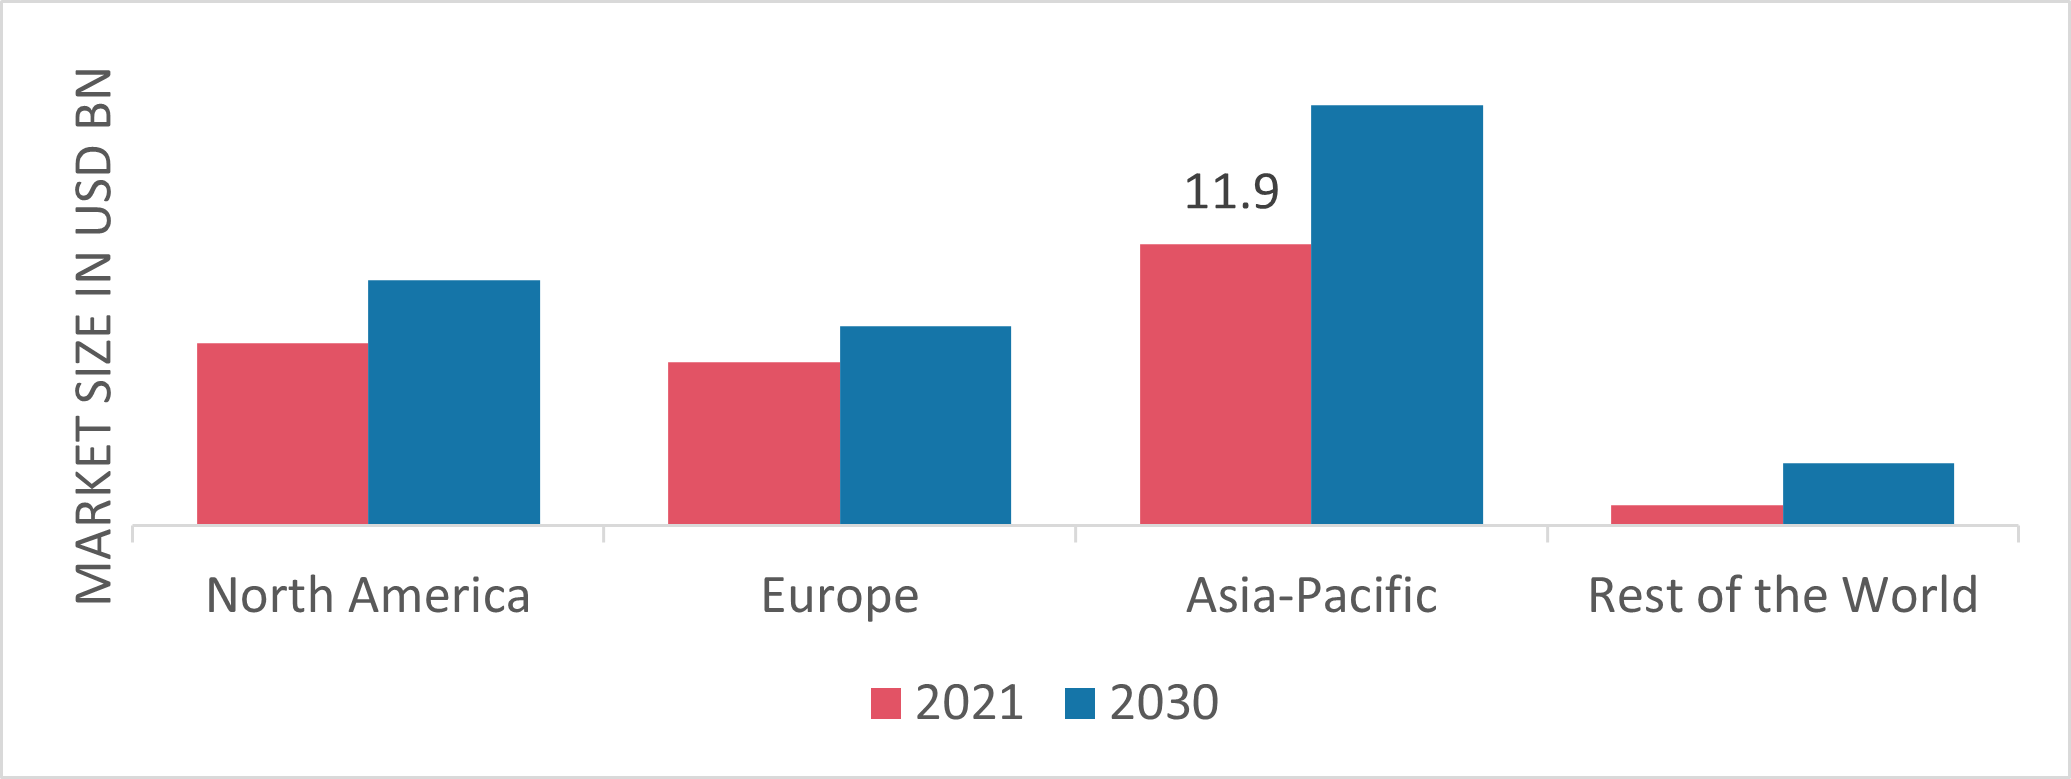 Industrial Gearbox Market Share By Region 2021 (%)